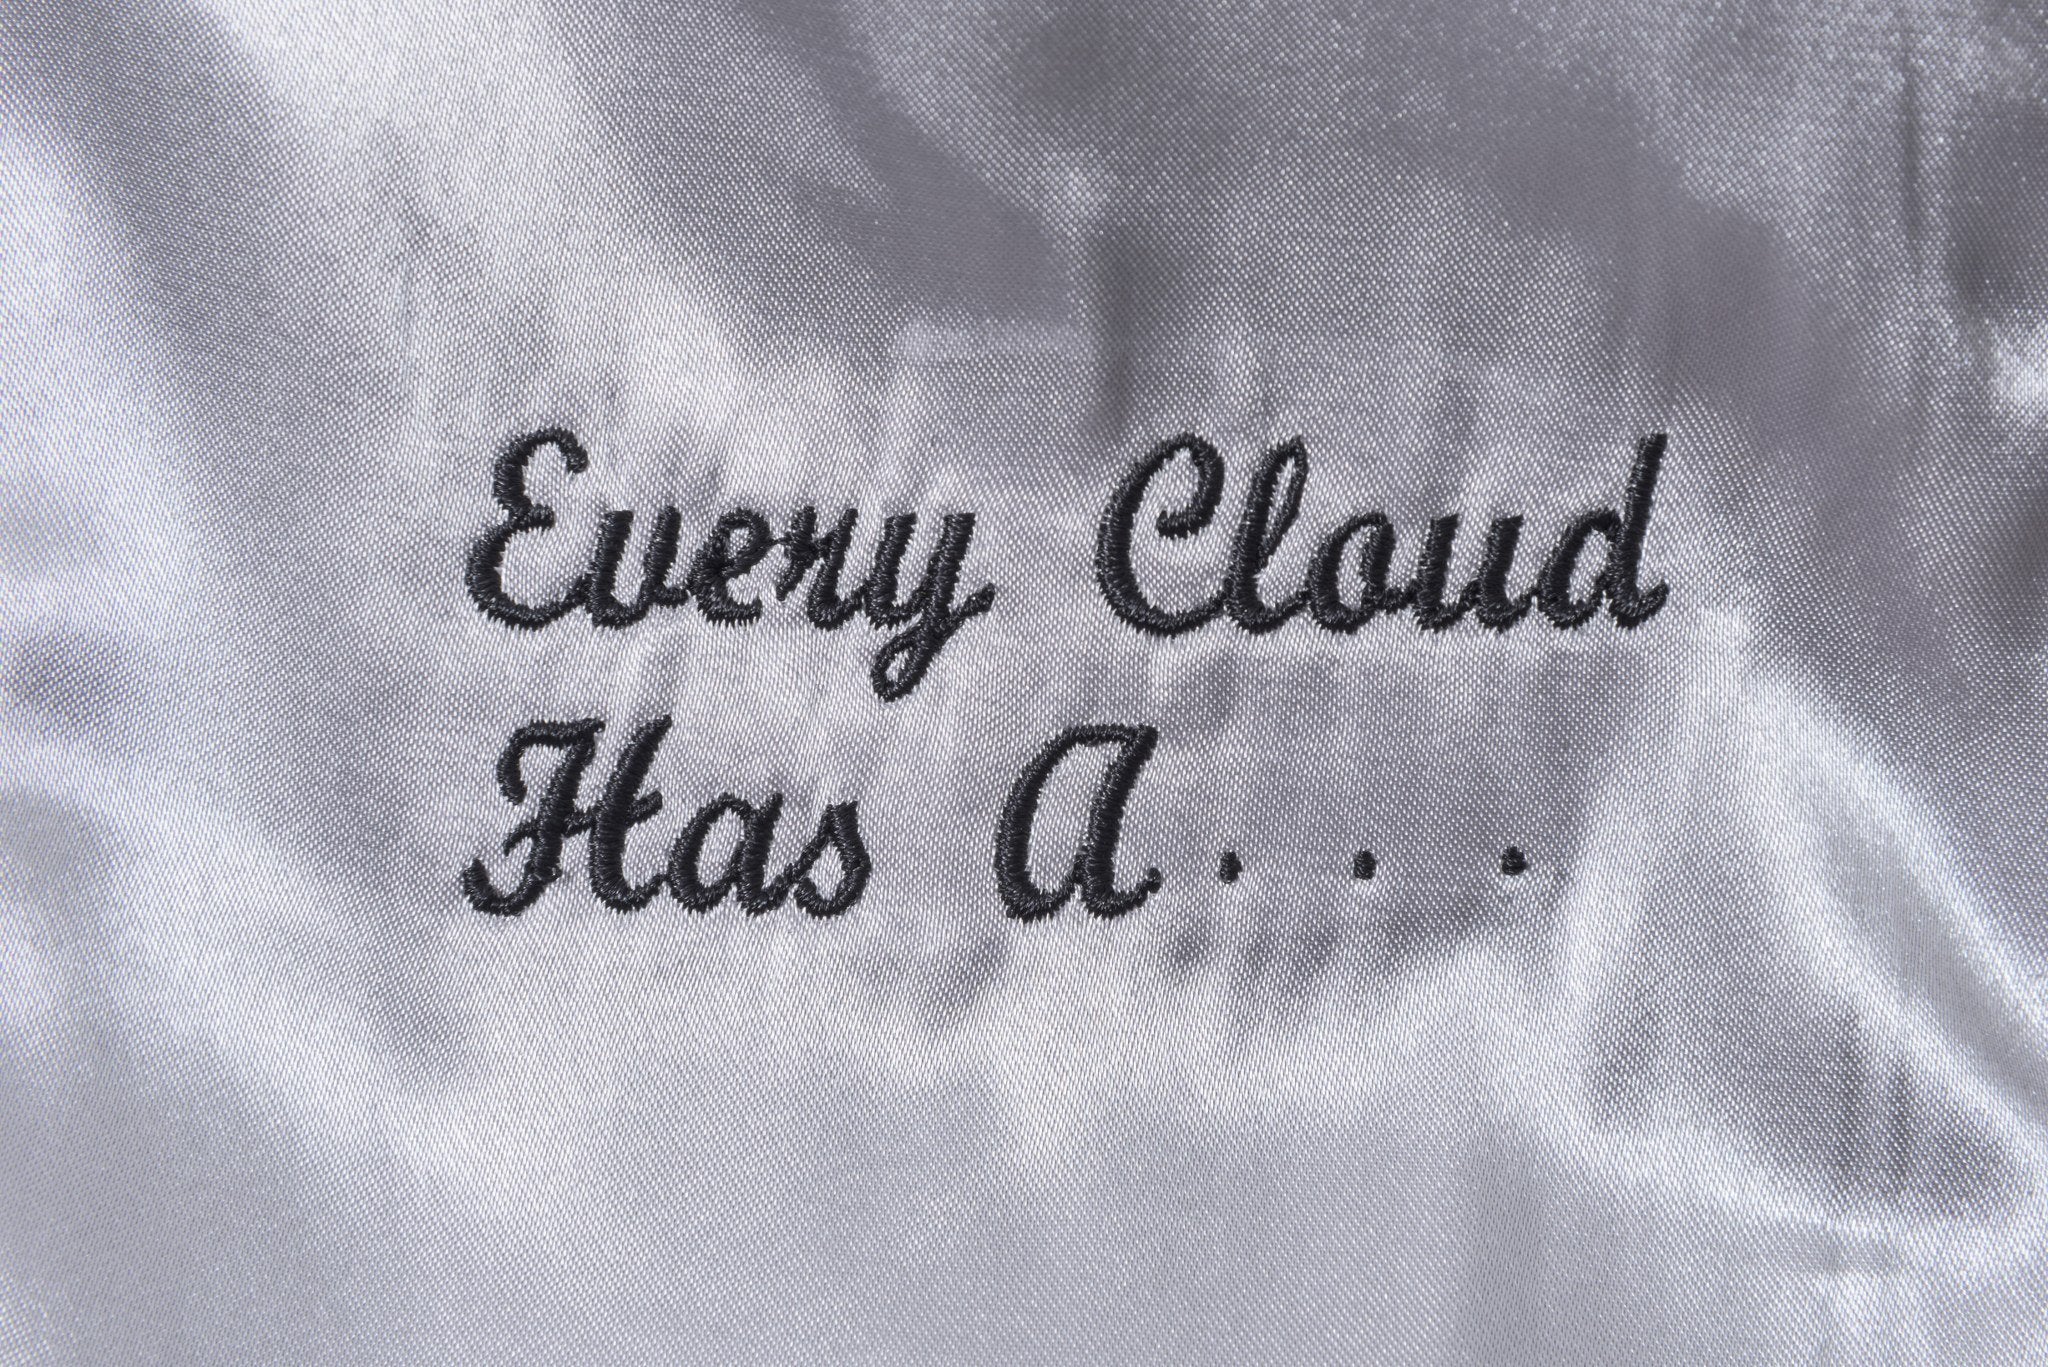 "Every Cloud Has A..." Blazer